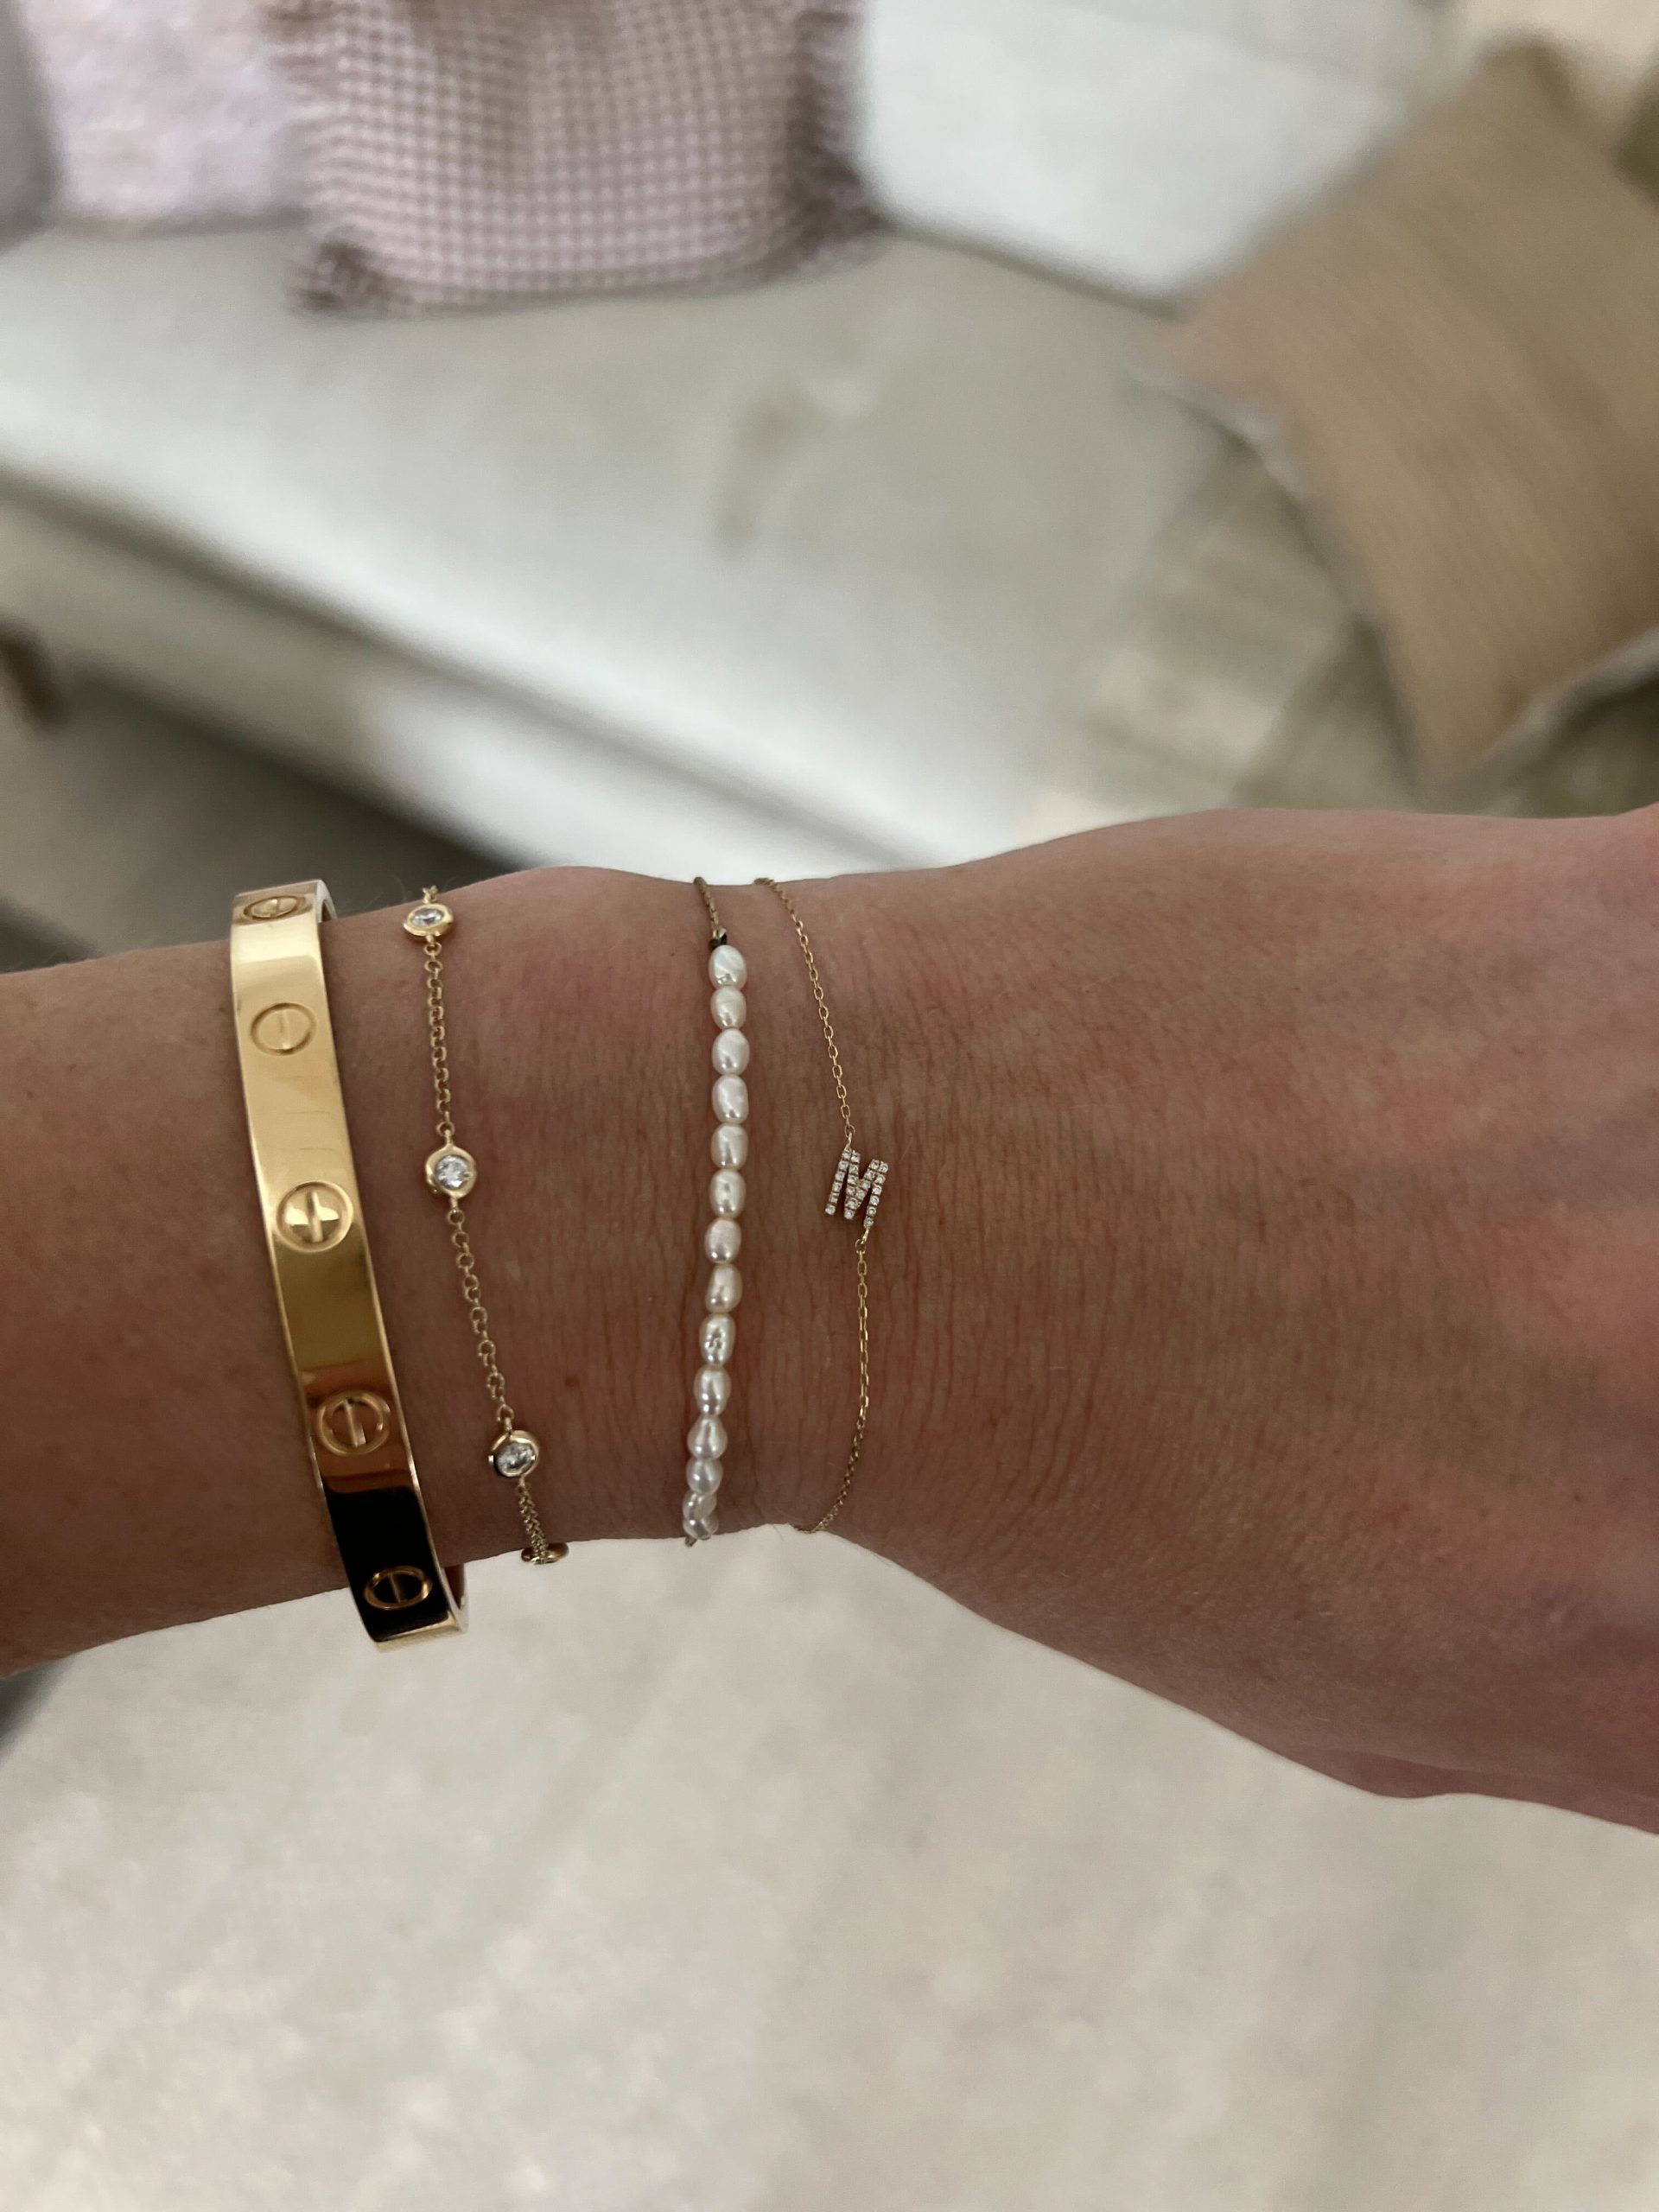 shea's bracelets